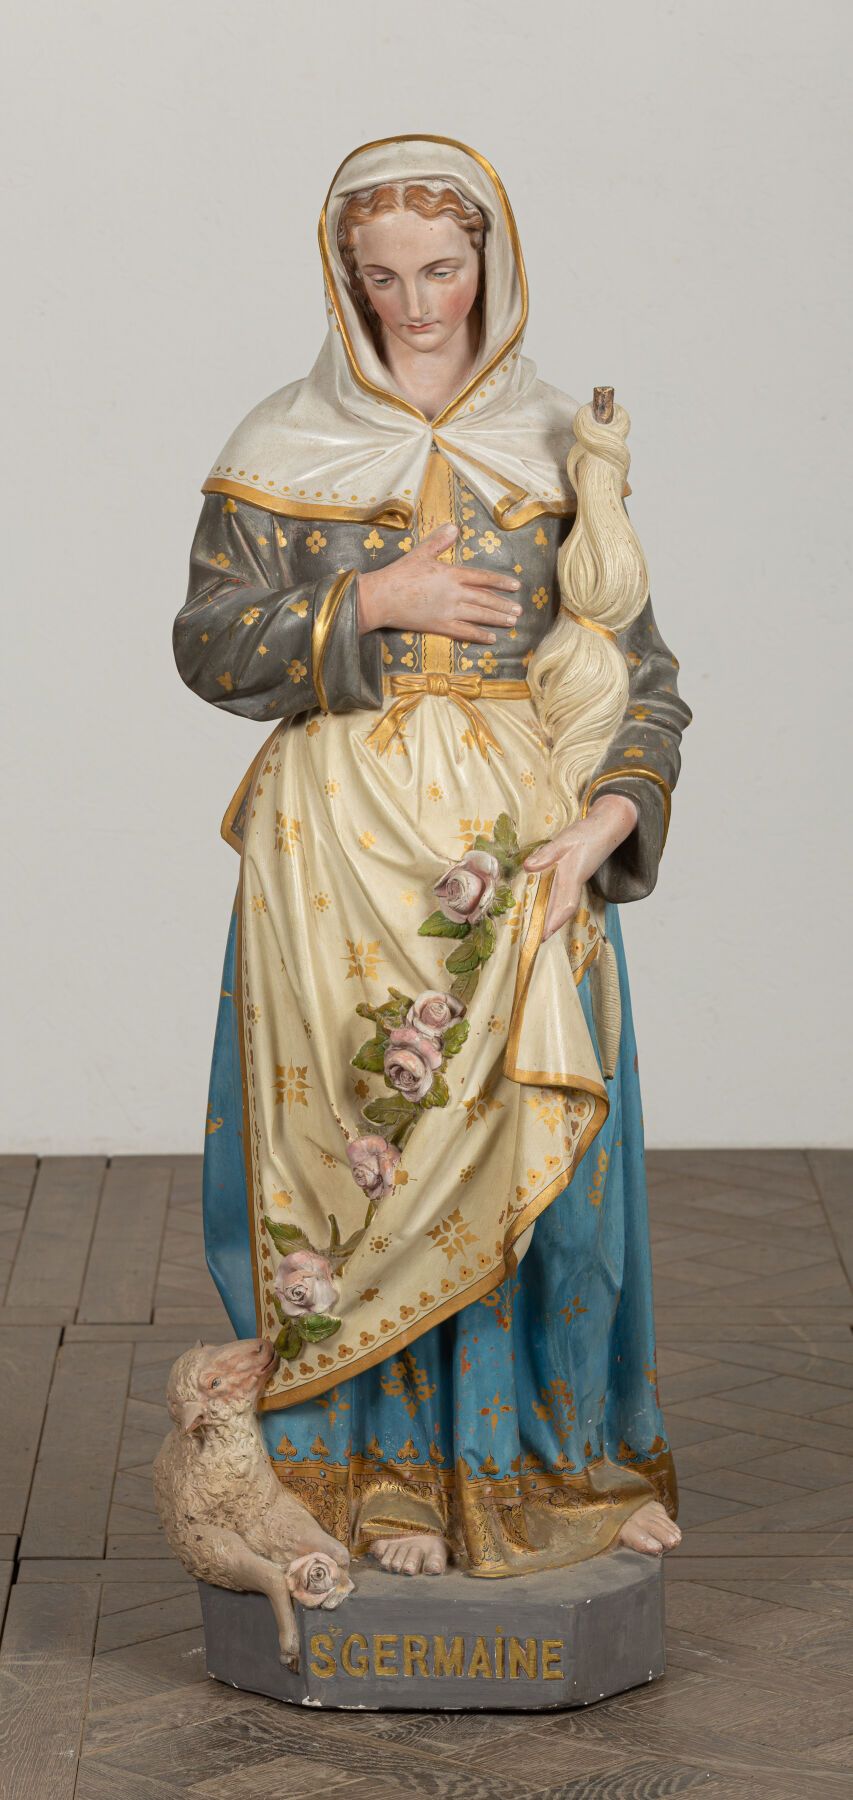 Null 圣杰曼（Saint Germaine）在多色赤土中。
她的衣服上有玫瑰花，脚上有一只小羊。 
底座上有注解。 
19世纪末。
高_127厘米，宽_48&hellip;